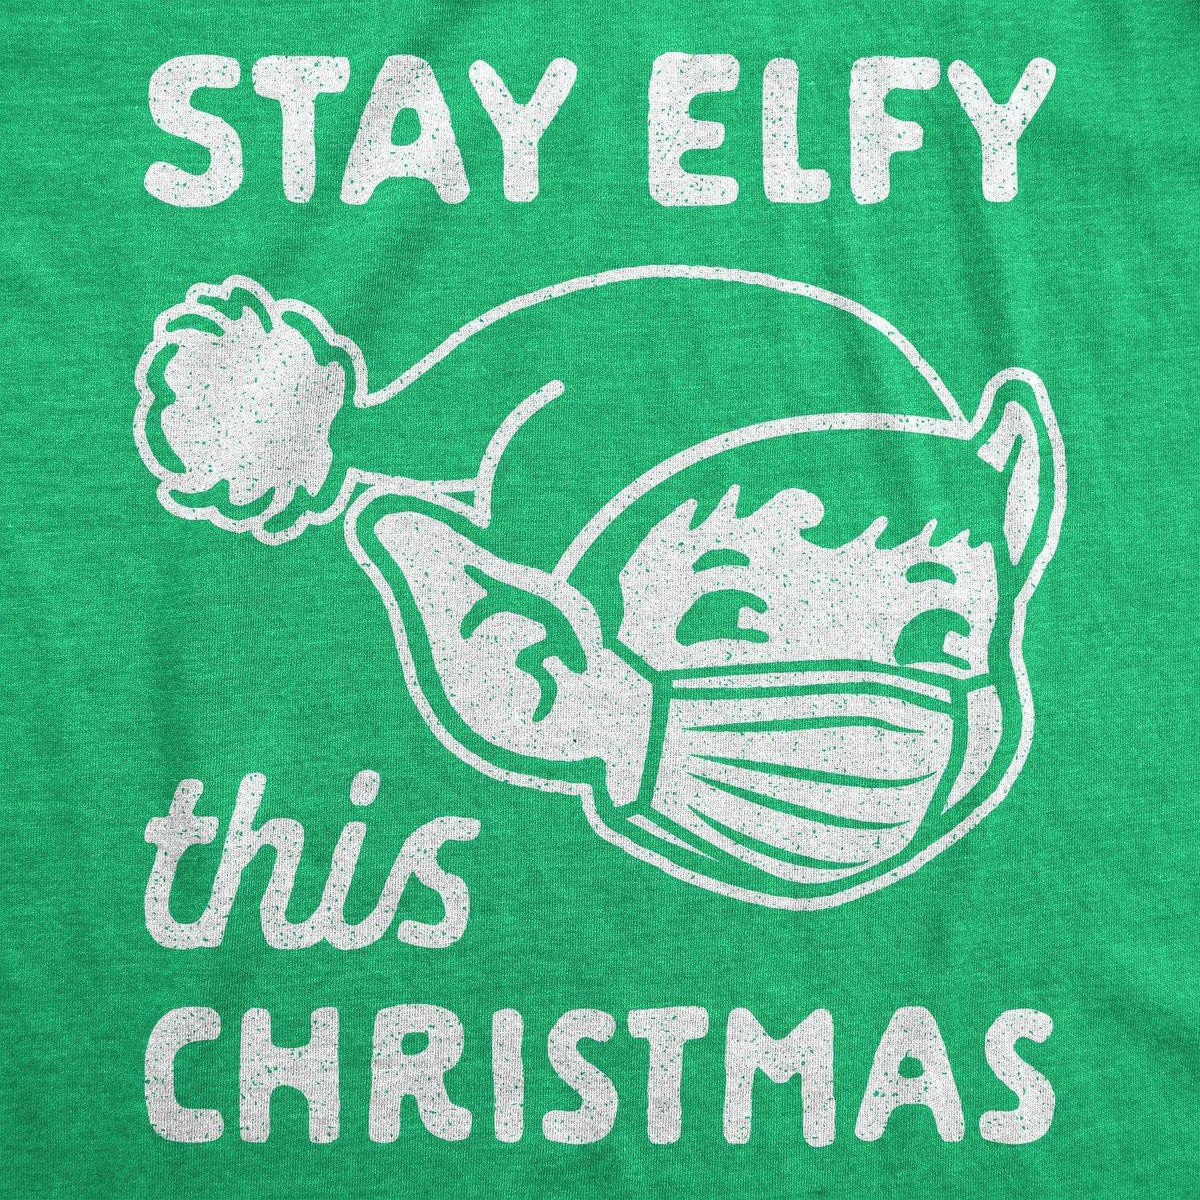 Stay Elfy This Christmas Men&#39;s Tshirt - Crazy Dog T-Shirts